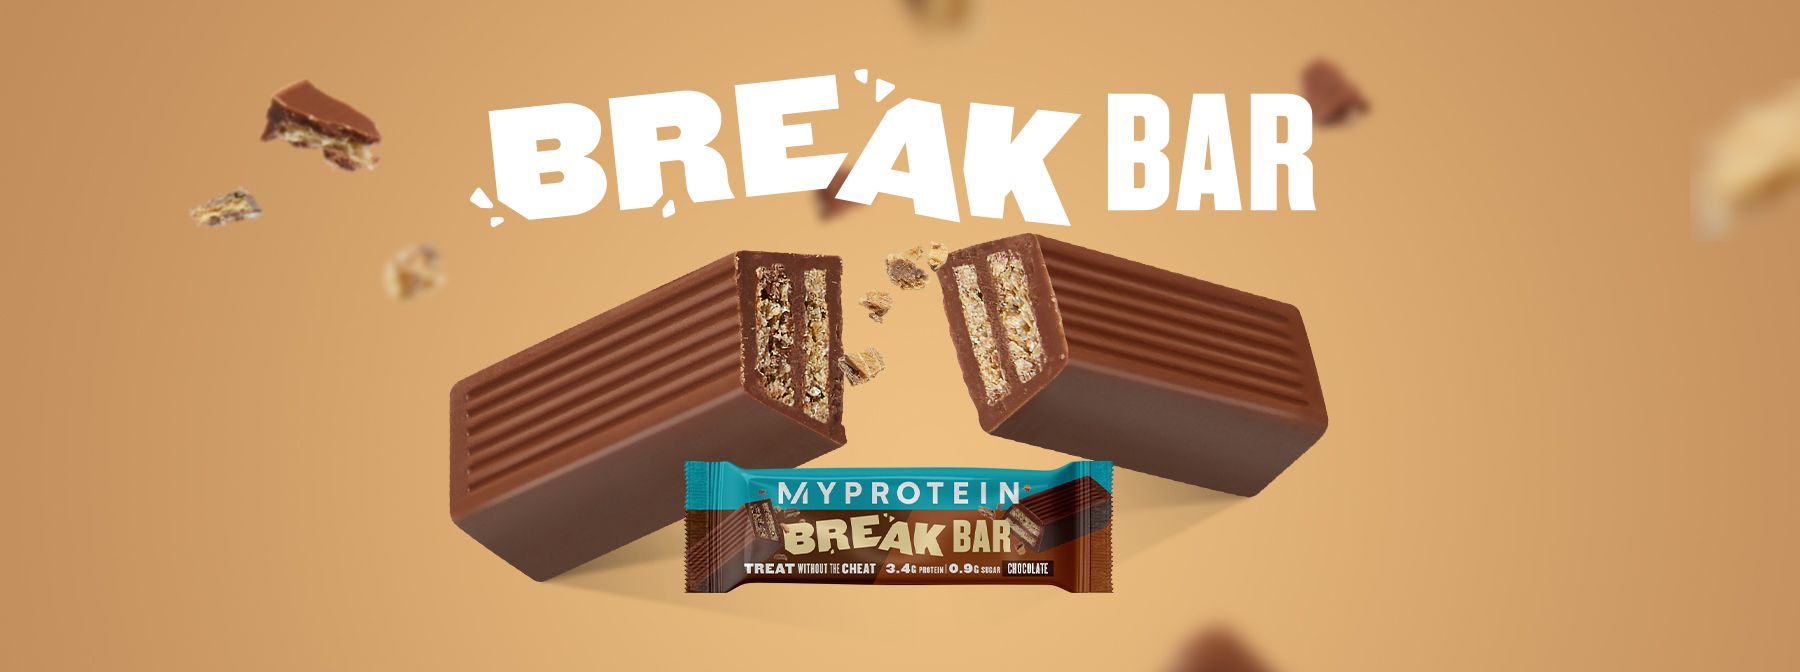 Ontdek de Break Bar!